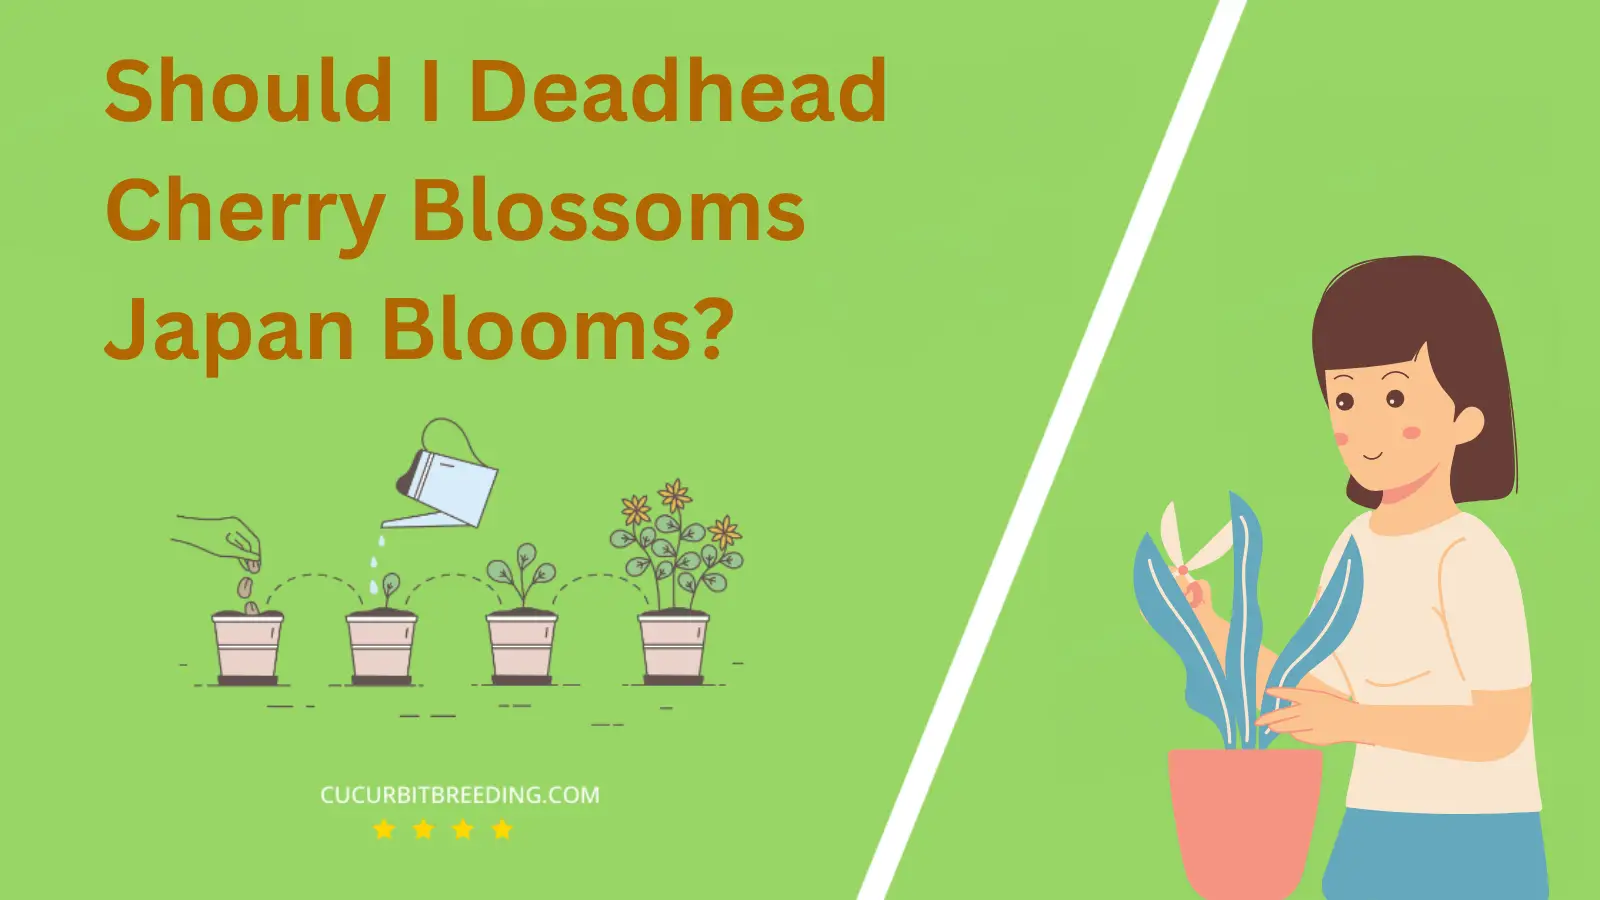 Should I Deadhead Cherry Blossoms Japan Blooms?